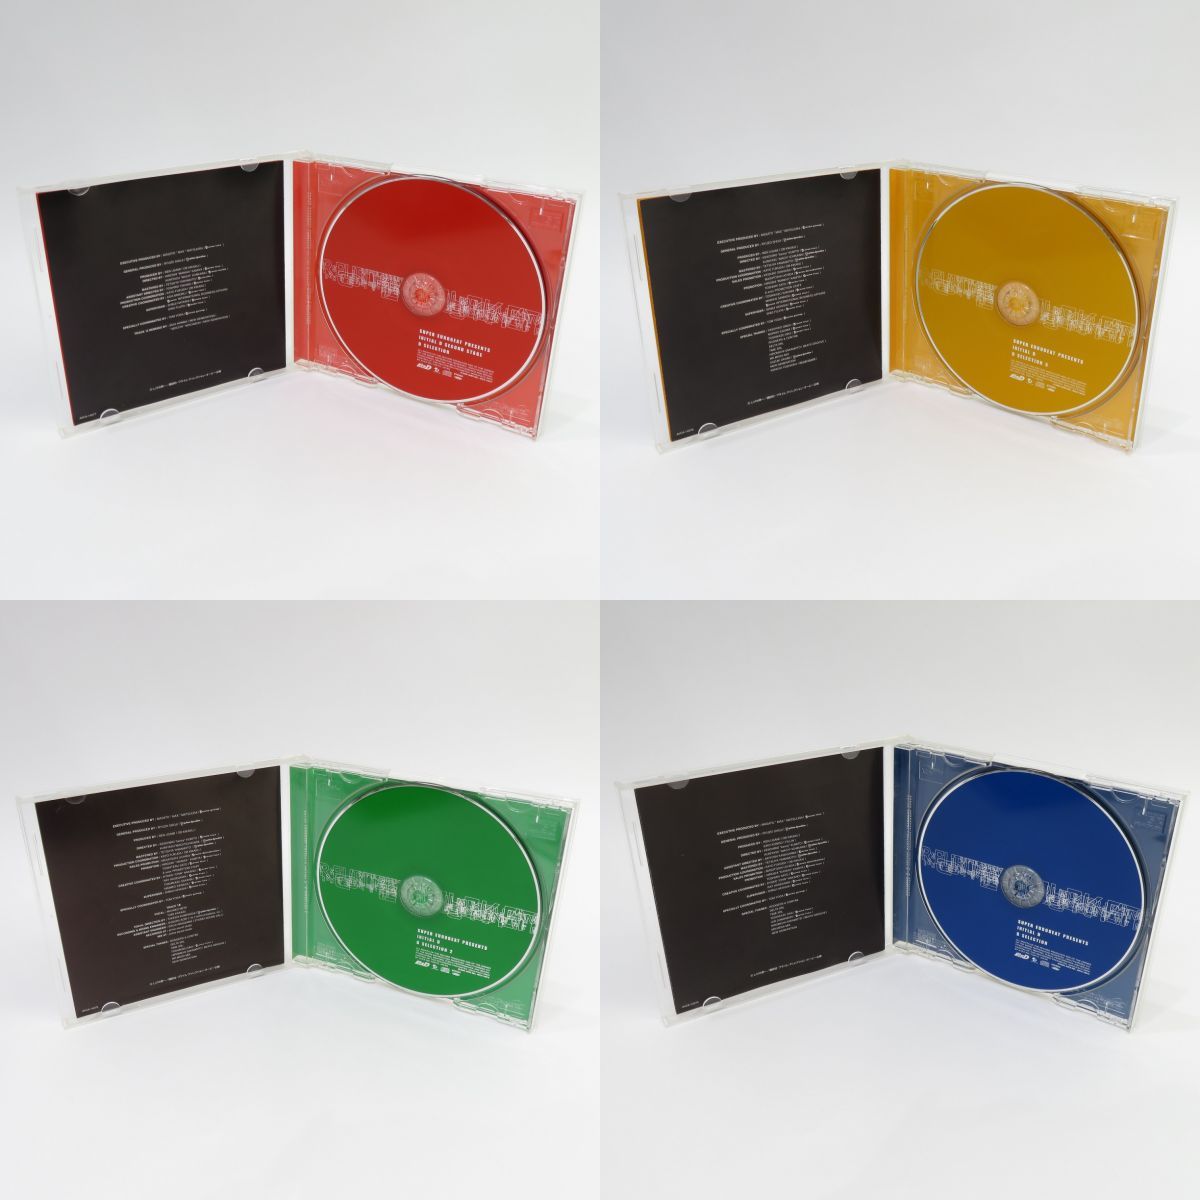 5CD SUPER EUROBEAT PRESENTS 頭文字(イニシャル)D MILLENNIUM BOX 